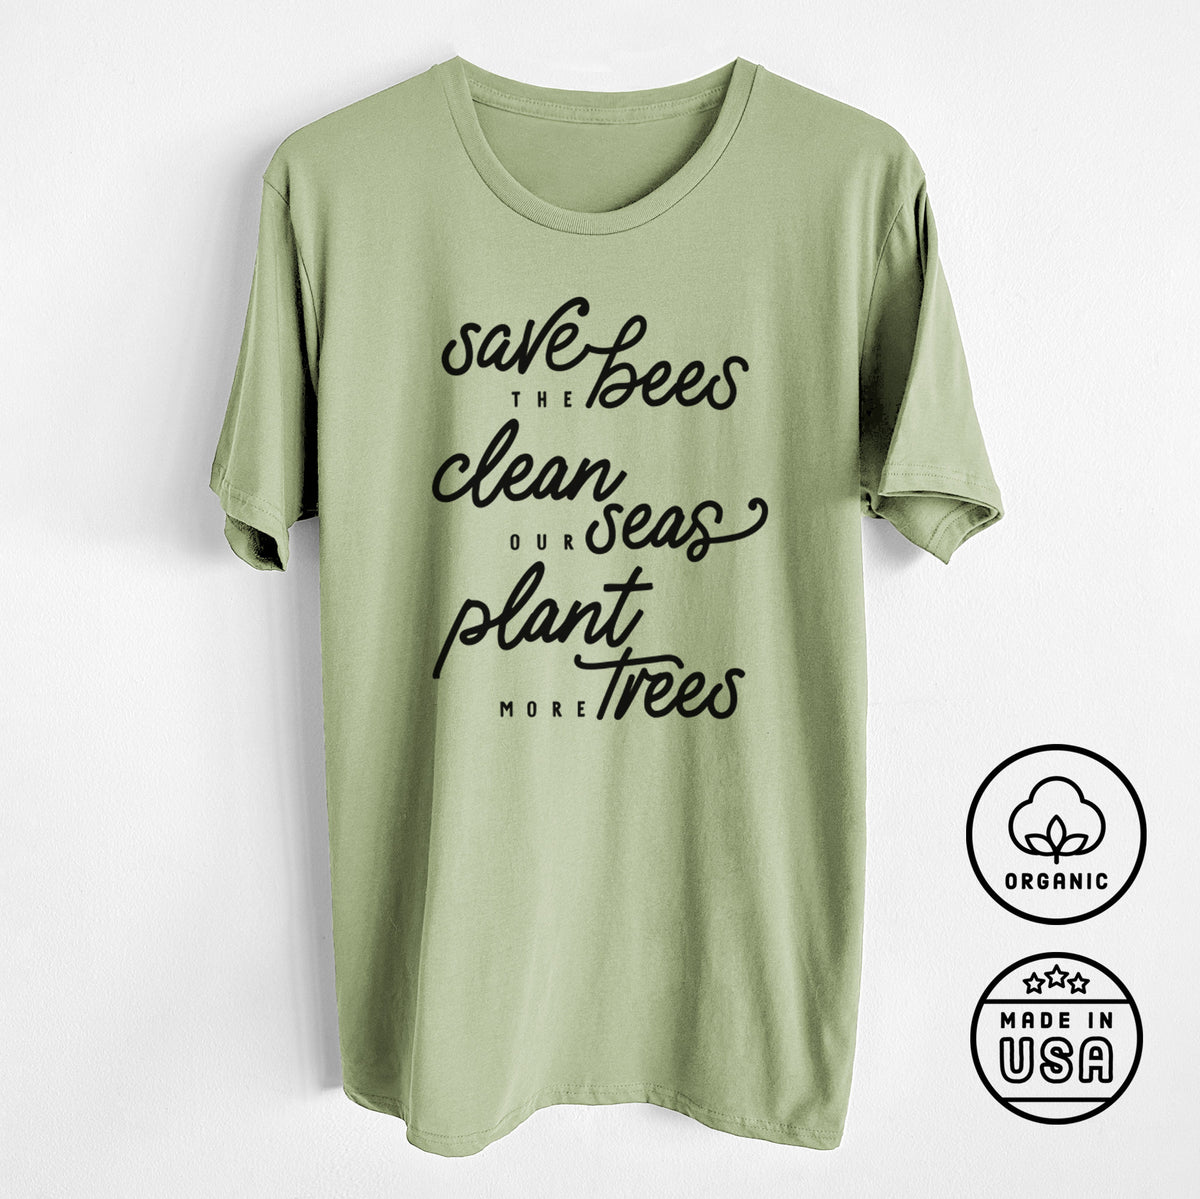 Bees Seas Trees - Typography - Unisex Crewneck - Made in USA - 100% Organic Cotton